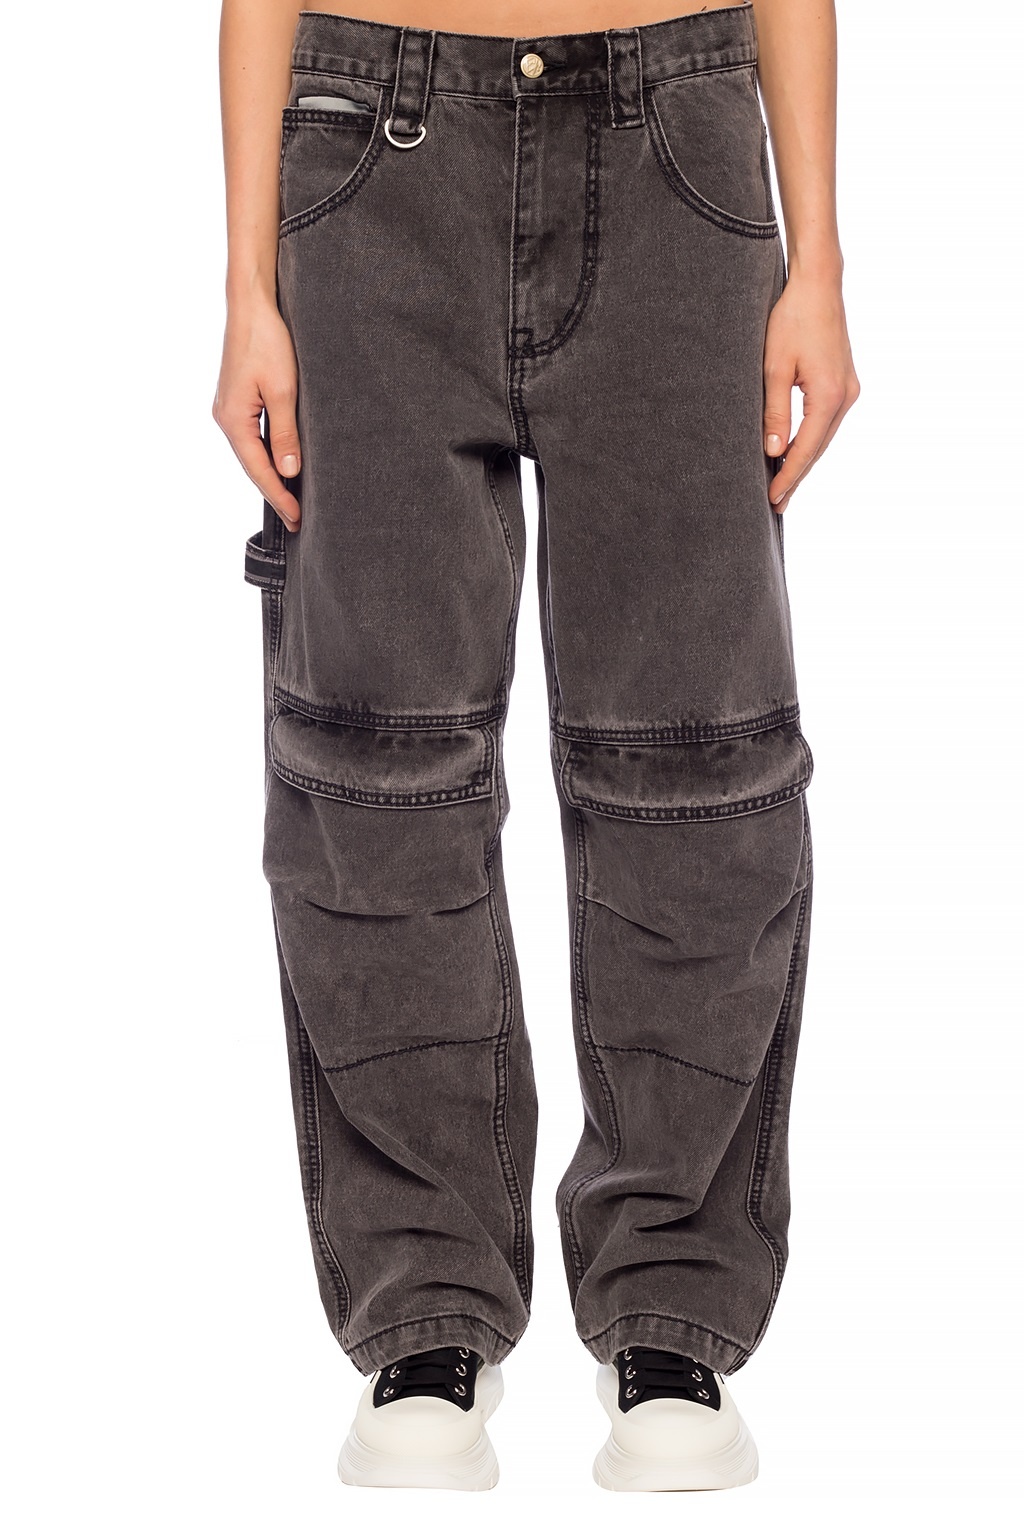 Titan' high-waisted jeans Eytys - Vitkac Australia